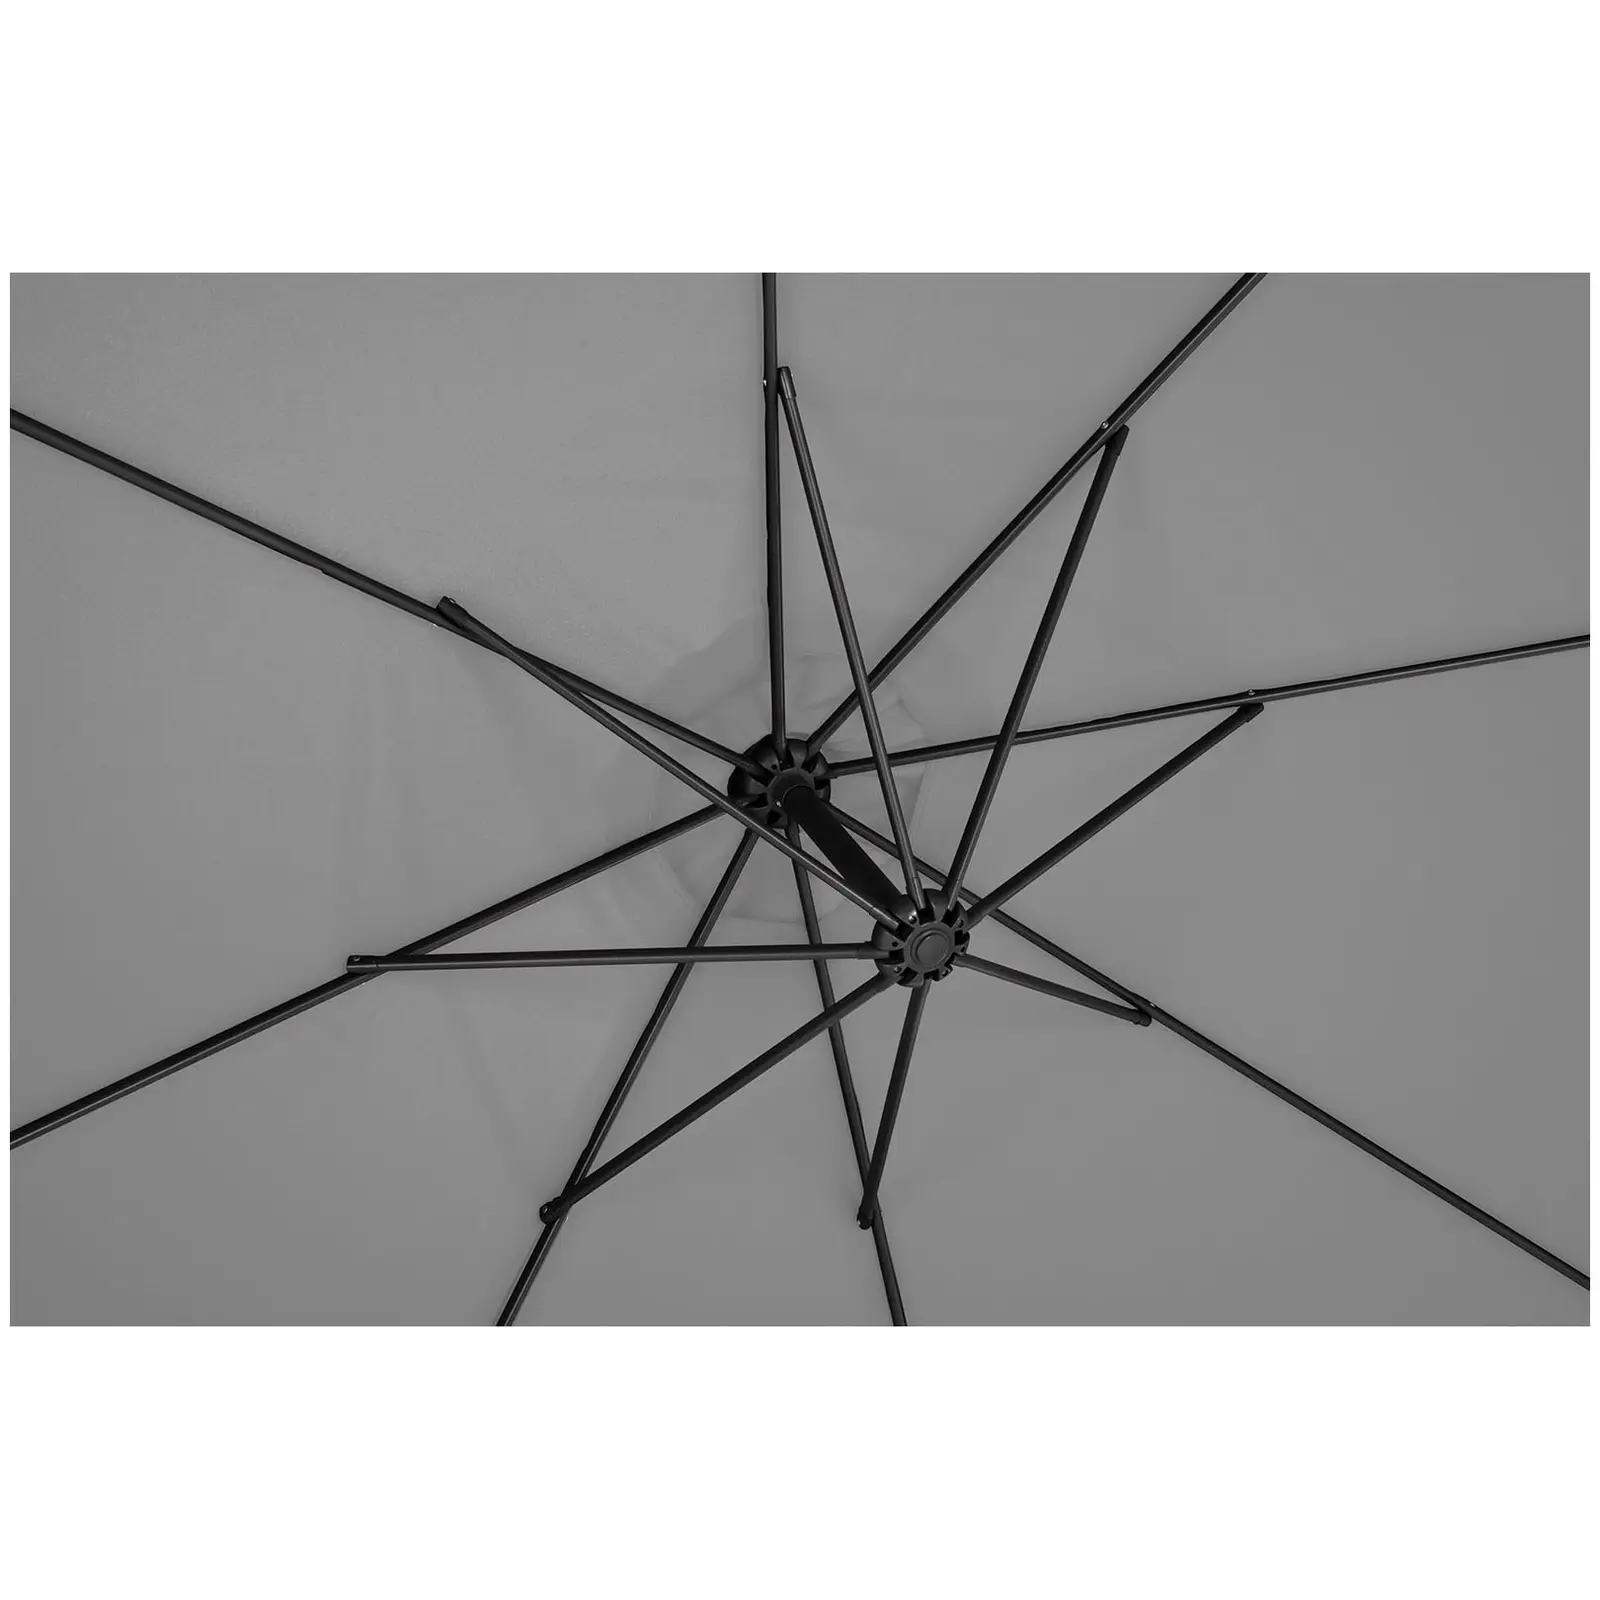 Hængeparasol - mørkegrå - rund - 300 cm i diameter